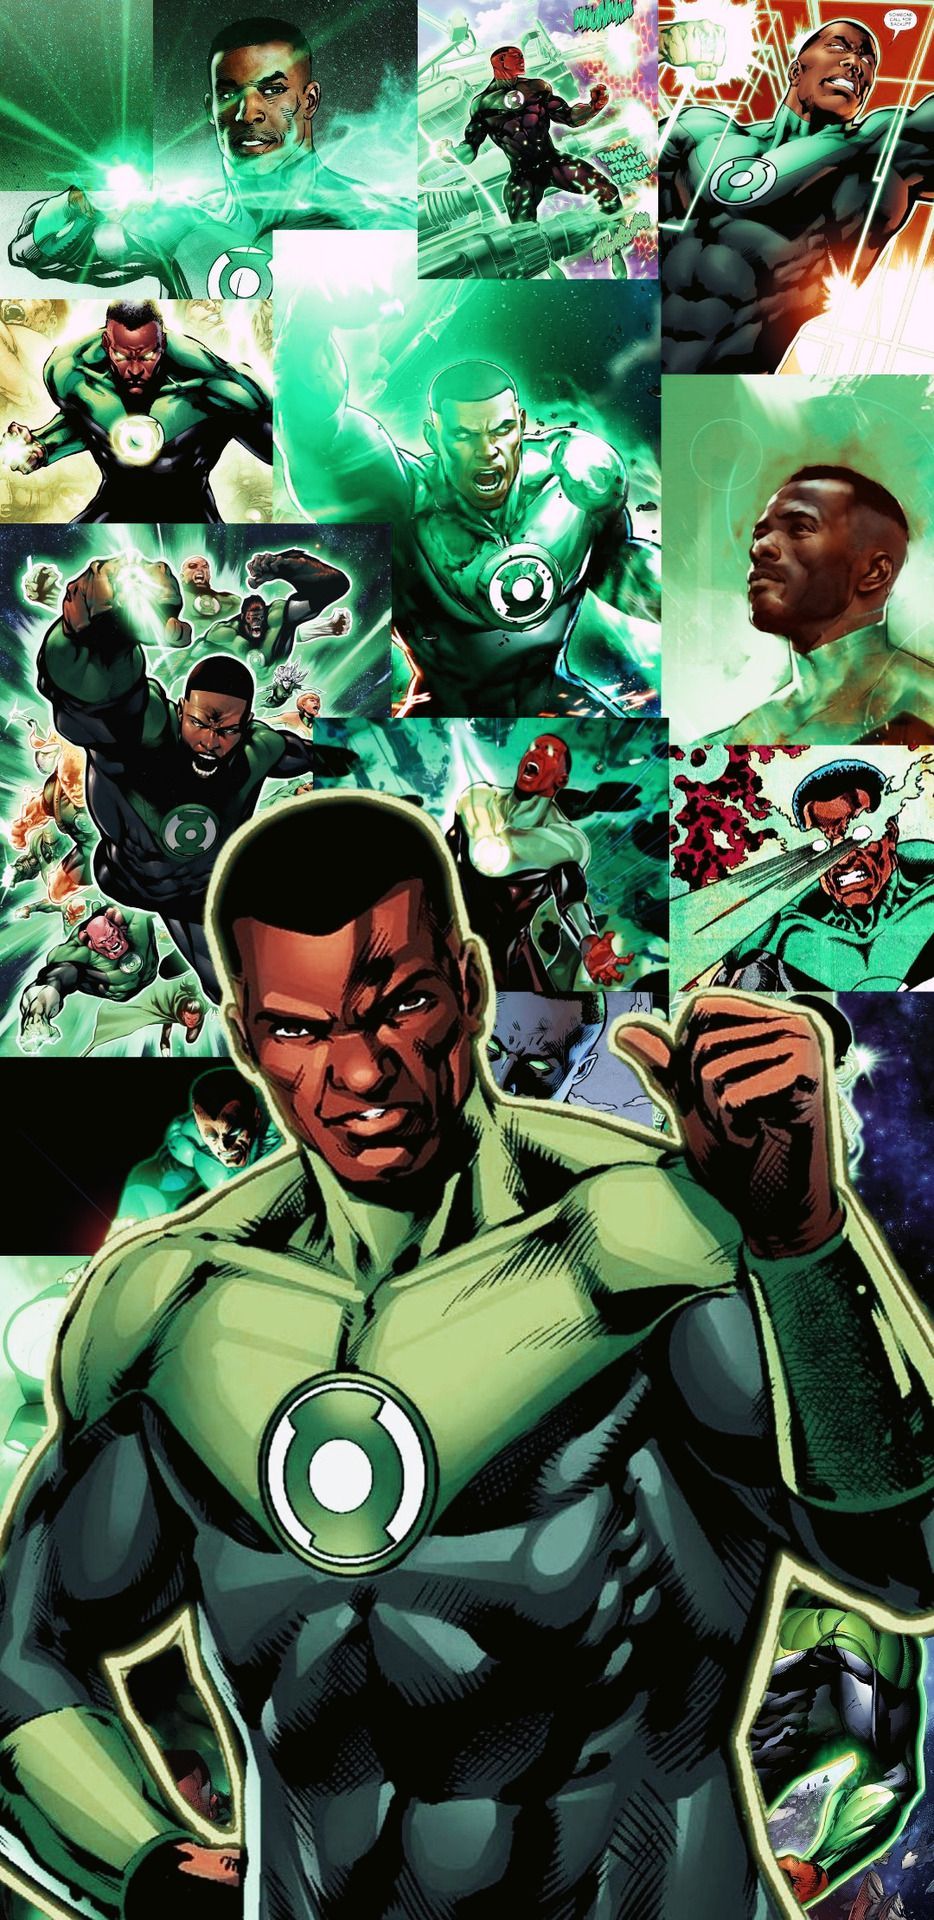 Green Lantern Corps Phone Wallpaper: John Stewart. Green lantern comics, Green lantern corps, Green lantern